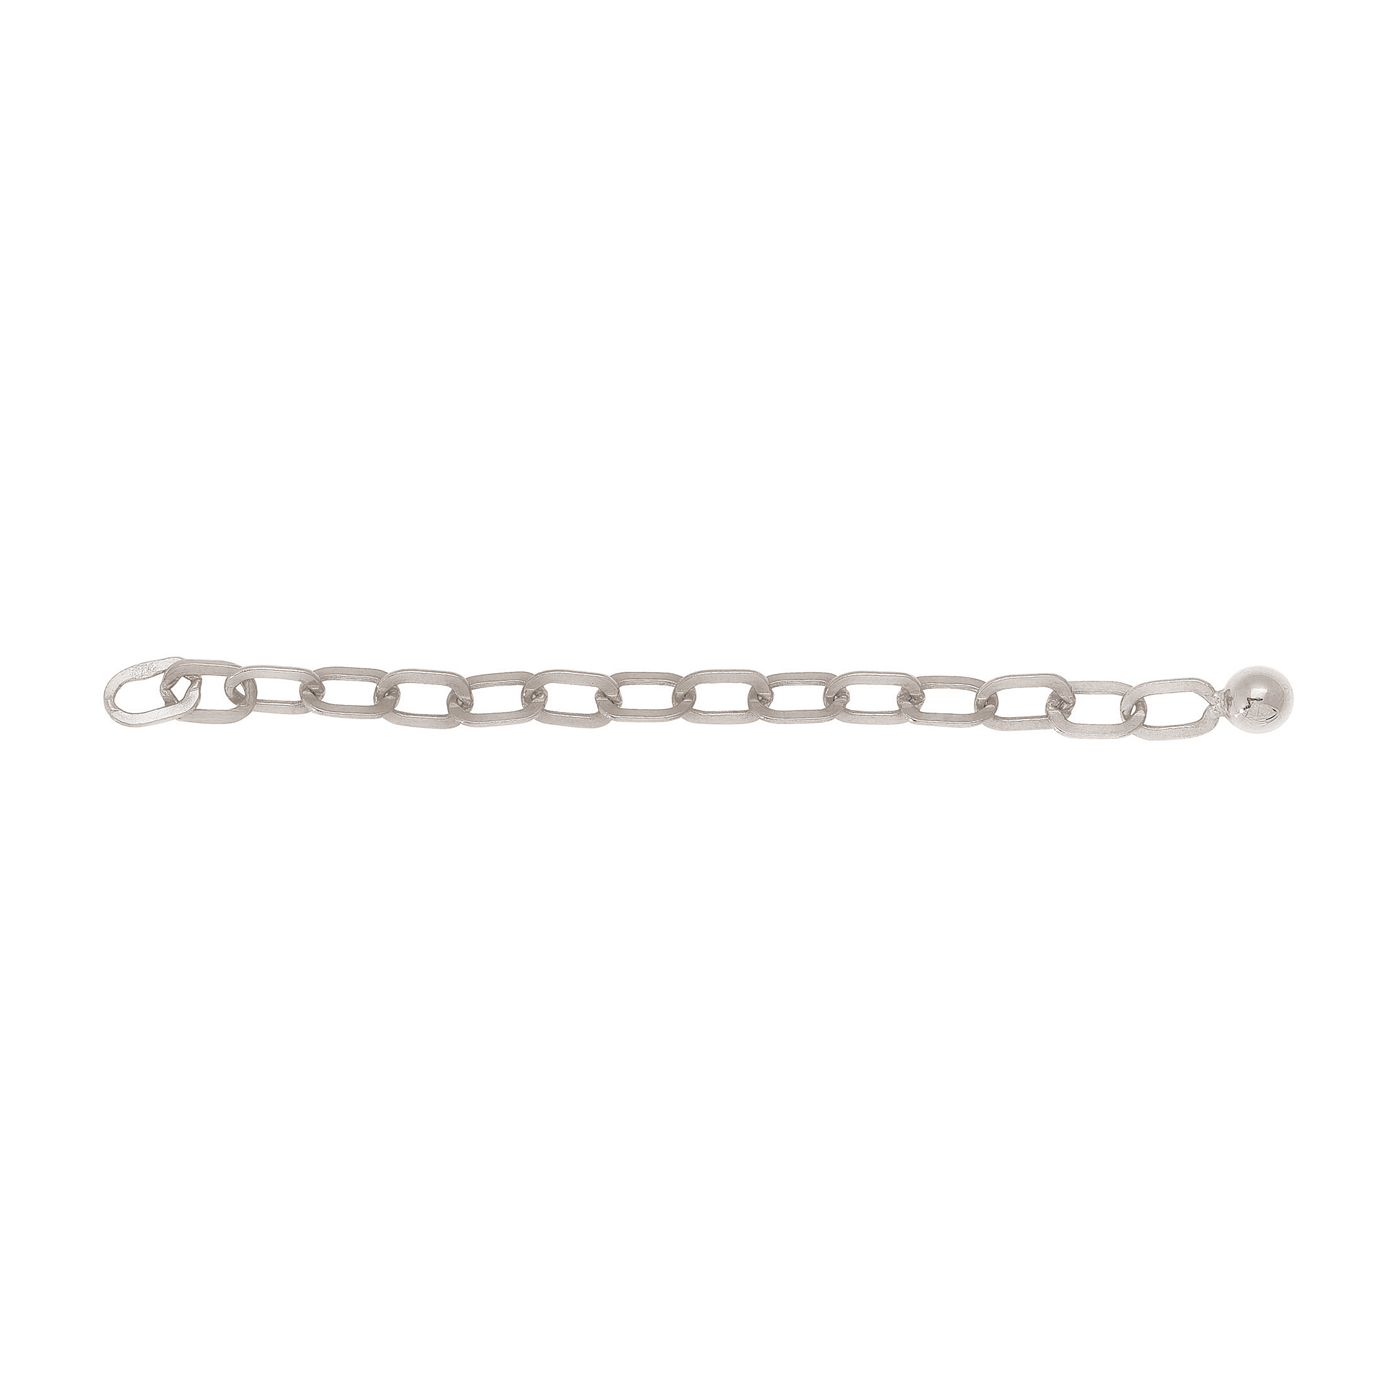 Elongation Chain, 925Ag, 70 mm - 1 piece